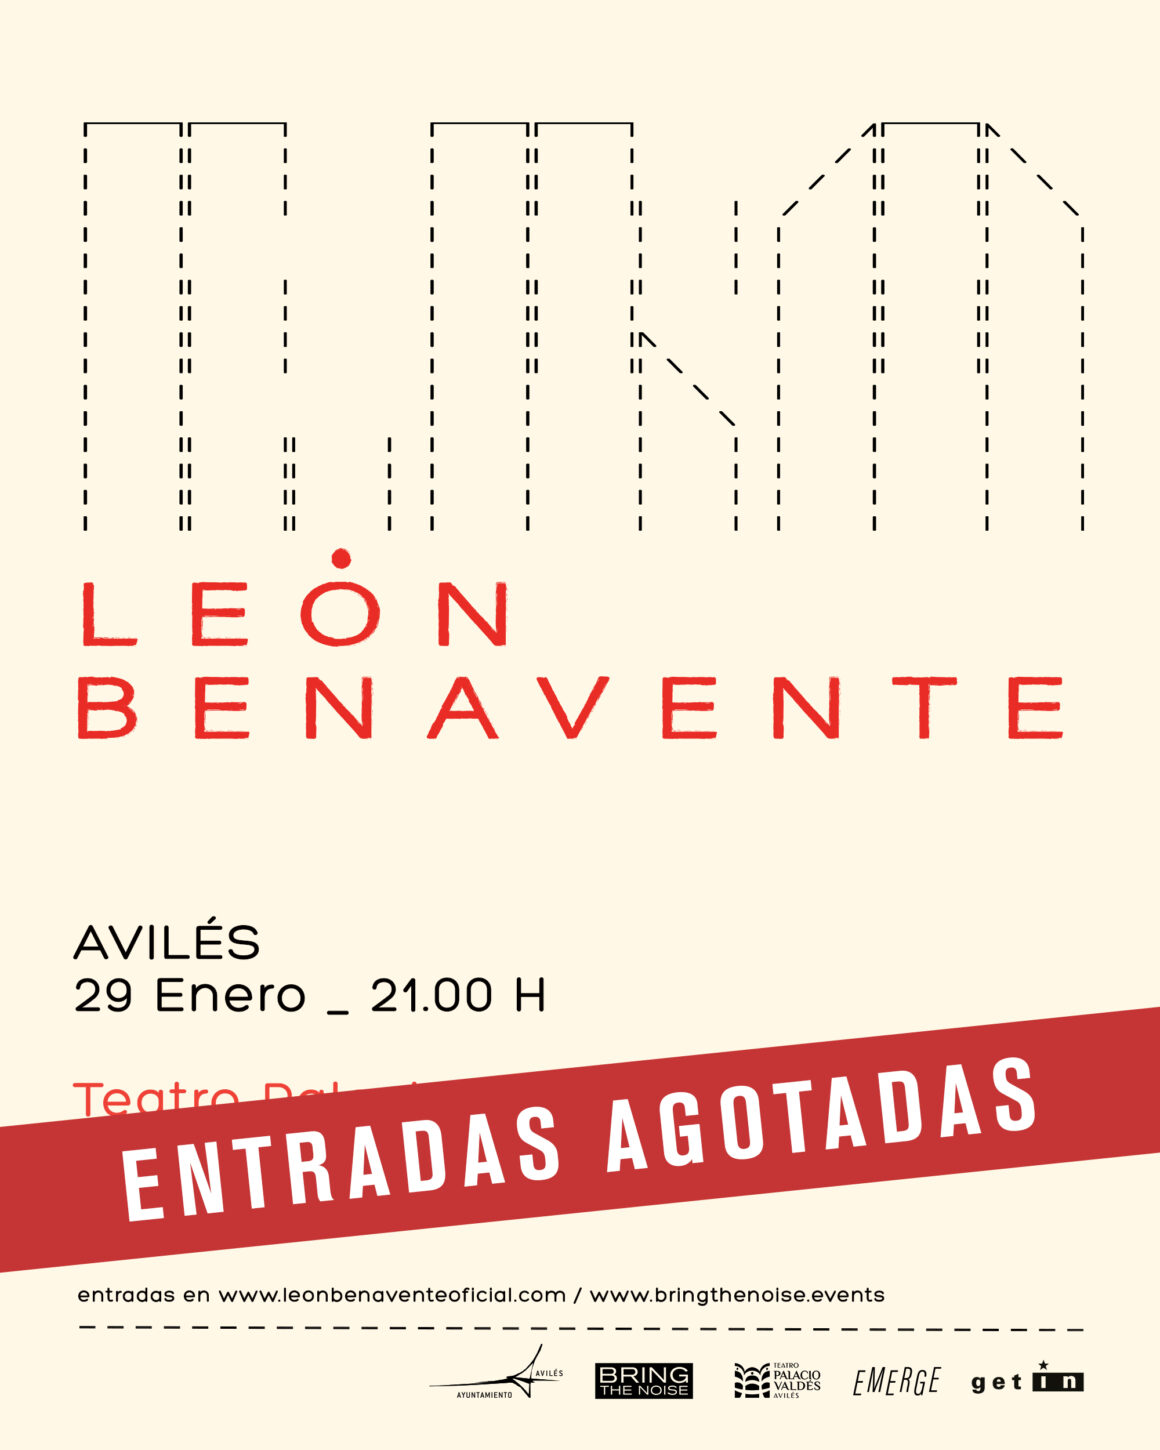 León Benavente agota entradas para su concierto en Avilés